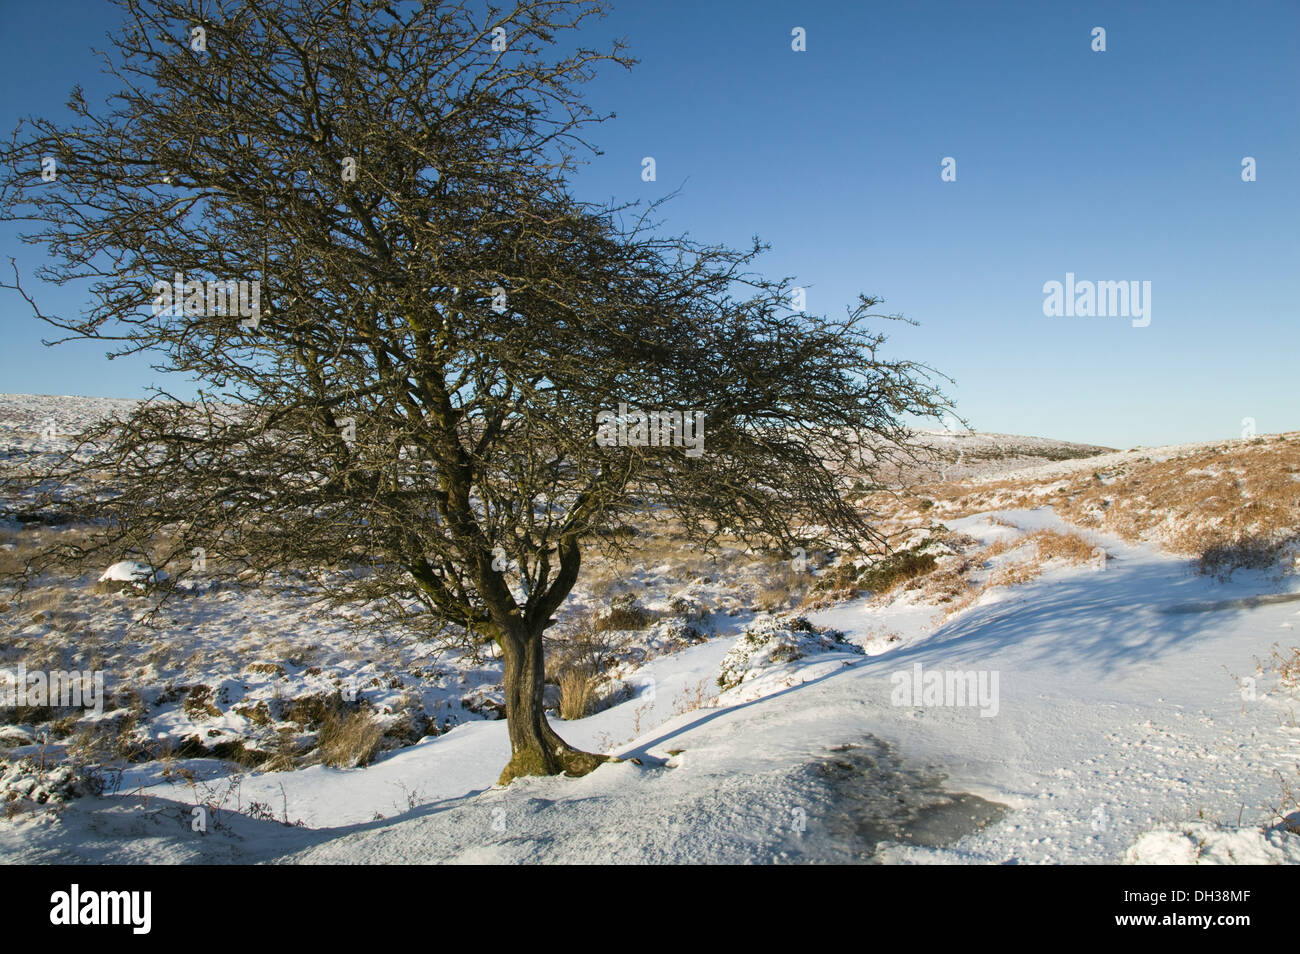 A lonely hawthorn tree in a snowy moorland landscape, near Postbridge, in Dartmoor National Park, Devon, Great Britain. Stock Photo